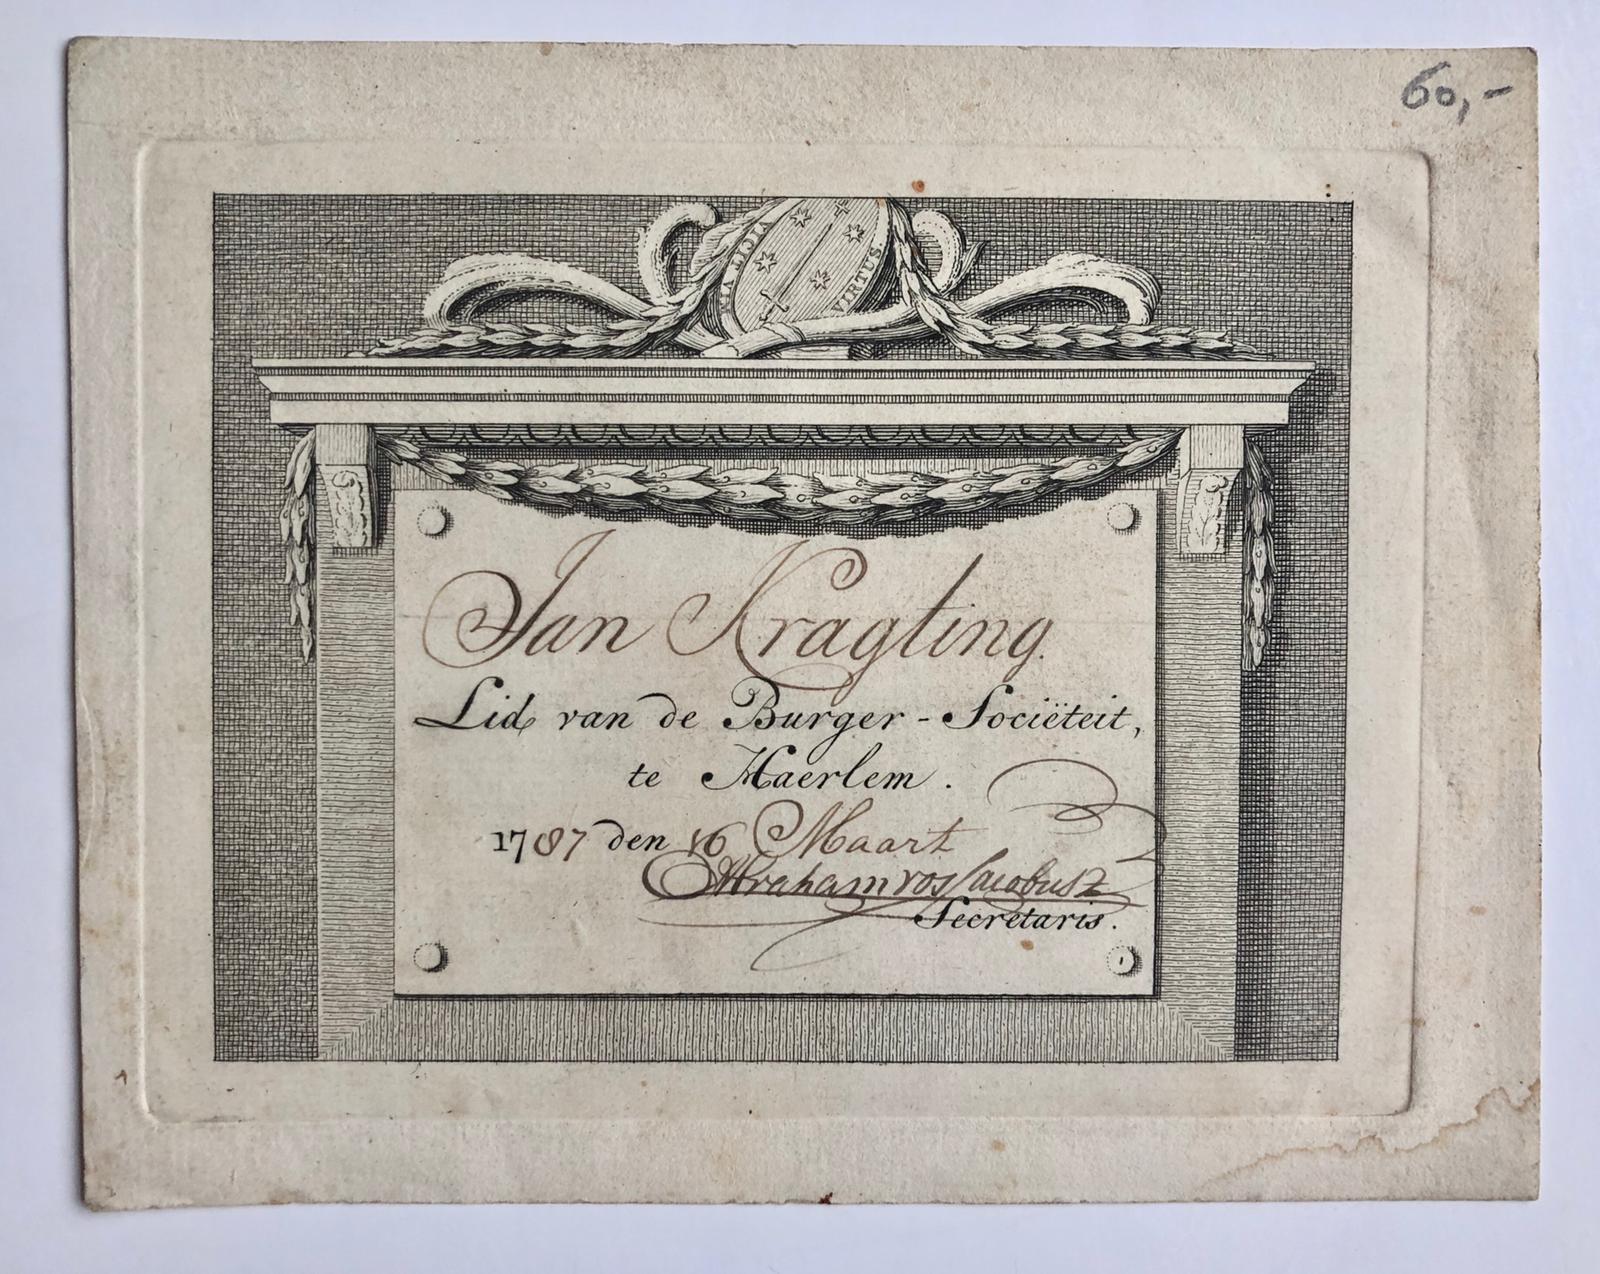  - [Diploma Haarlem, 1787] Lidmaatschaps-diploma voor Jan Kragting van de Burger-societeit (burgersocieteit) te Haarlem, 1787. Getekend Abraham Vos Jacobsz, secretaris. Deels gedrukt, 1 pag.